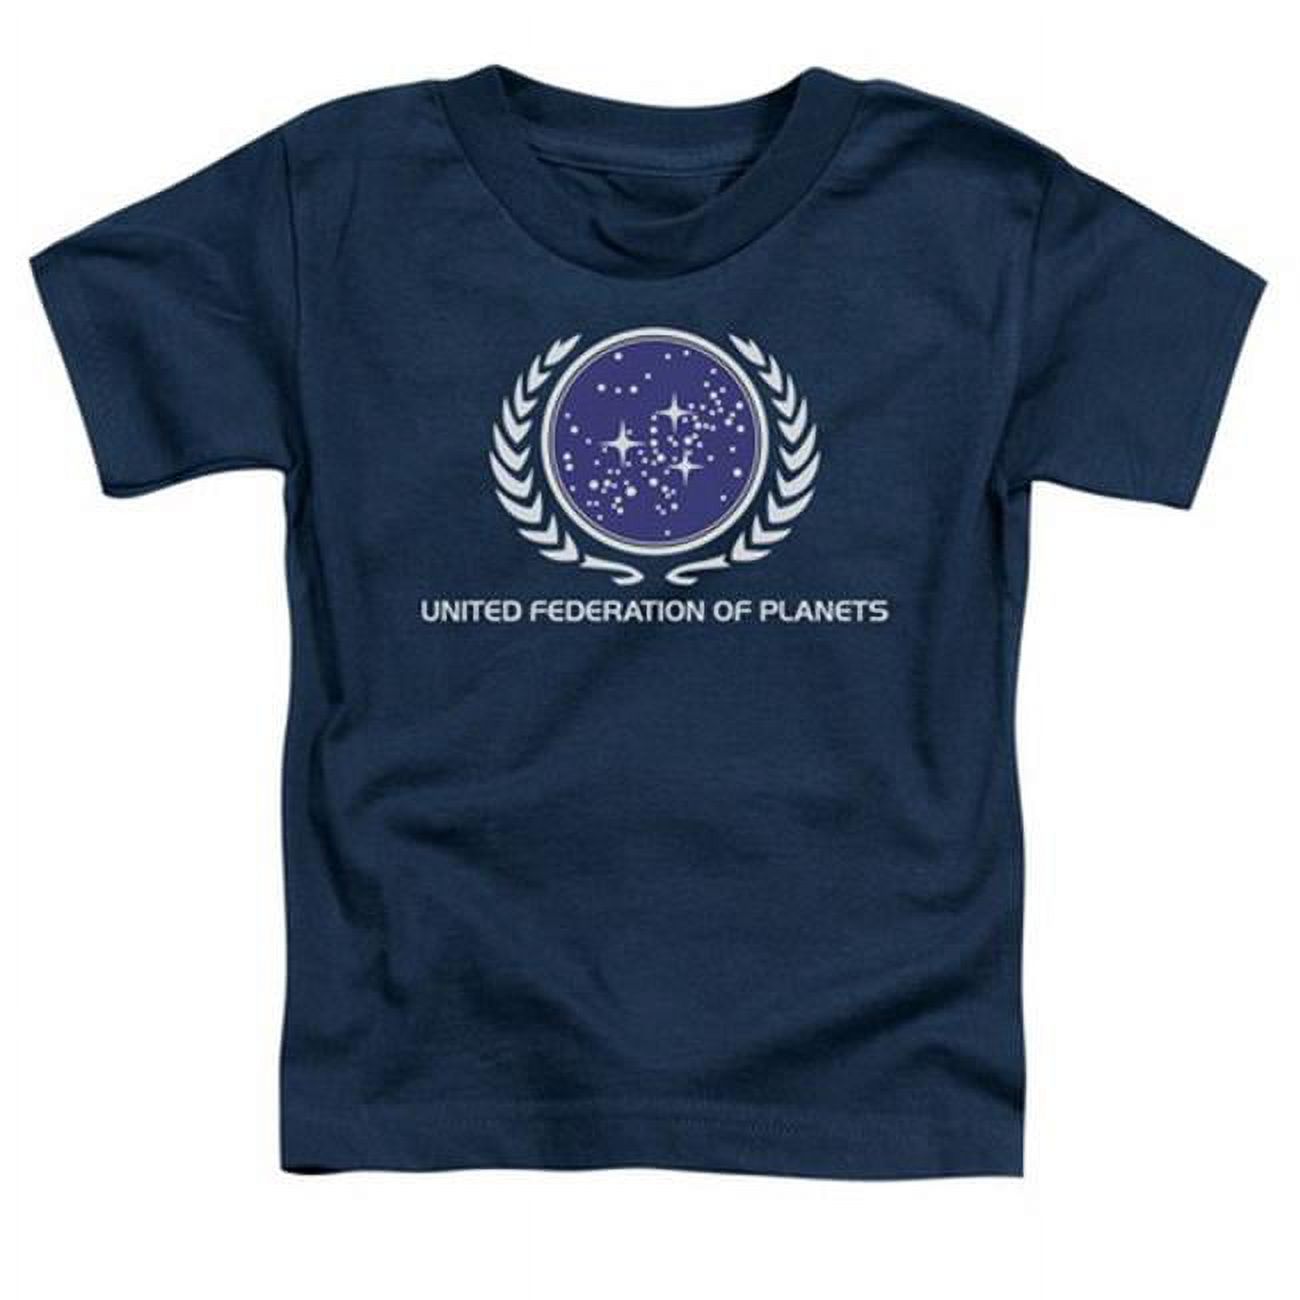 Trevco Star Trek-United Federation Logo - Short Sleeve Toddler Tee - Navy- Small 2T - image 1 of 1